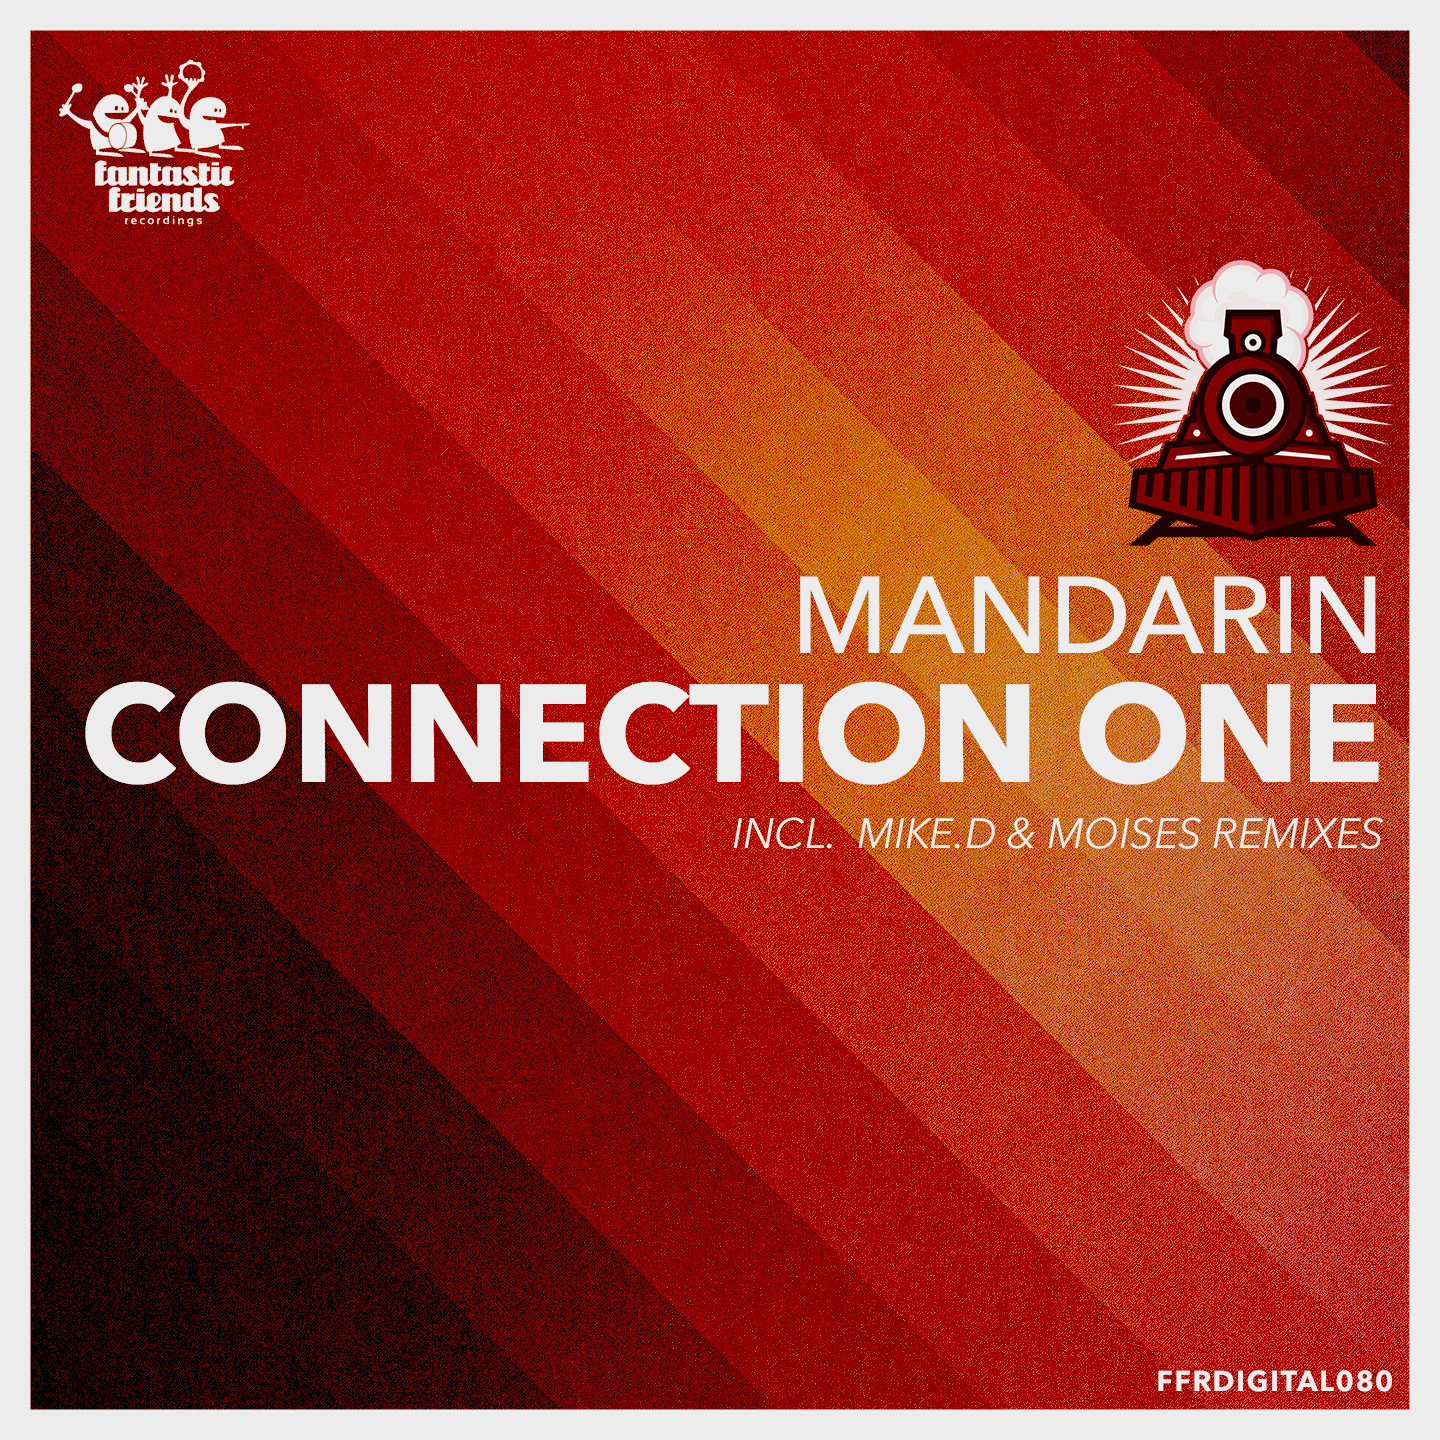 MANDARIN CONNECTION ONE